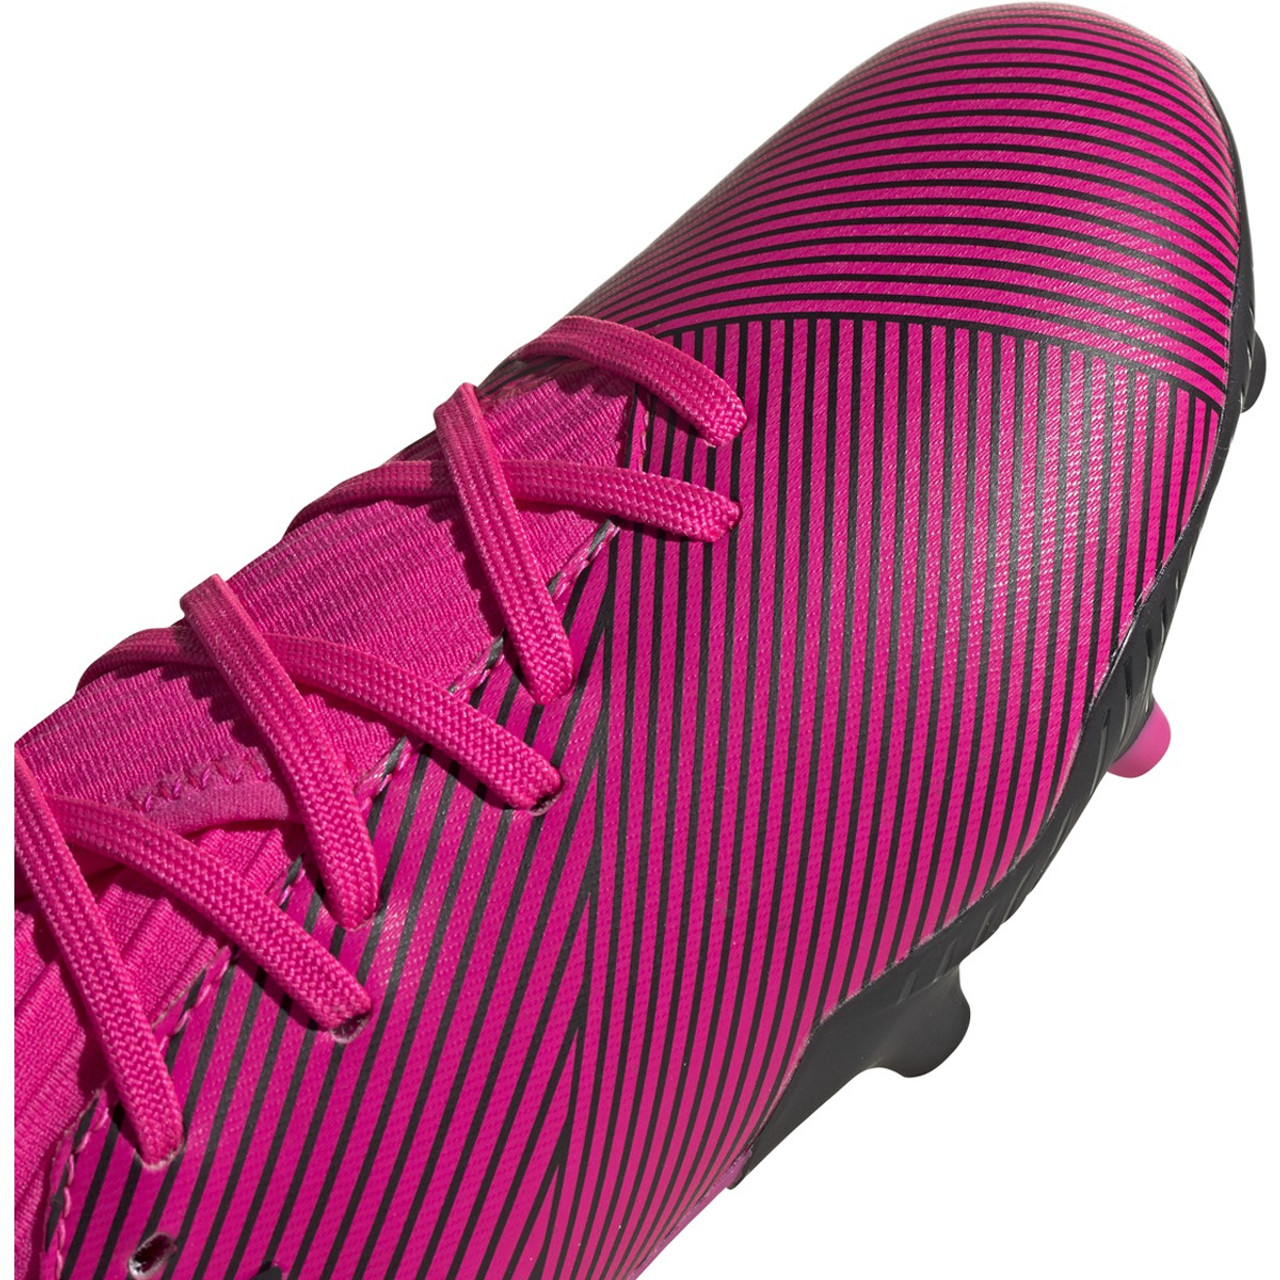 Adidas Nemeziz 19 3 Fg Junior Soccer Cleats F99953 Shock Pink Black